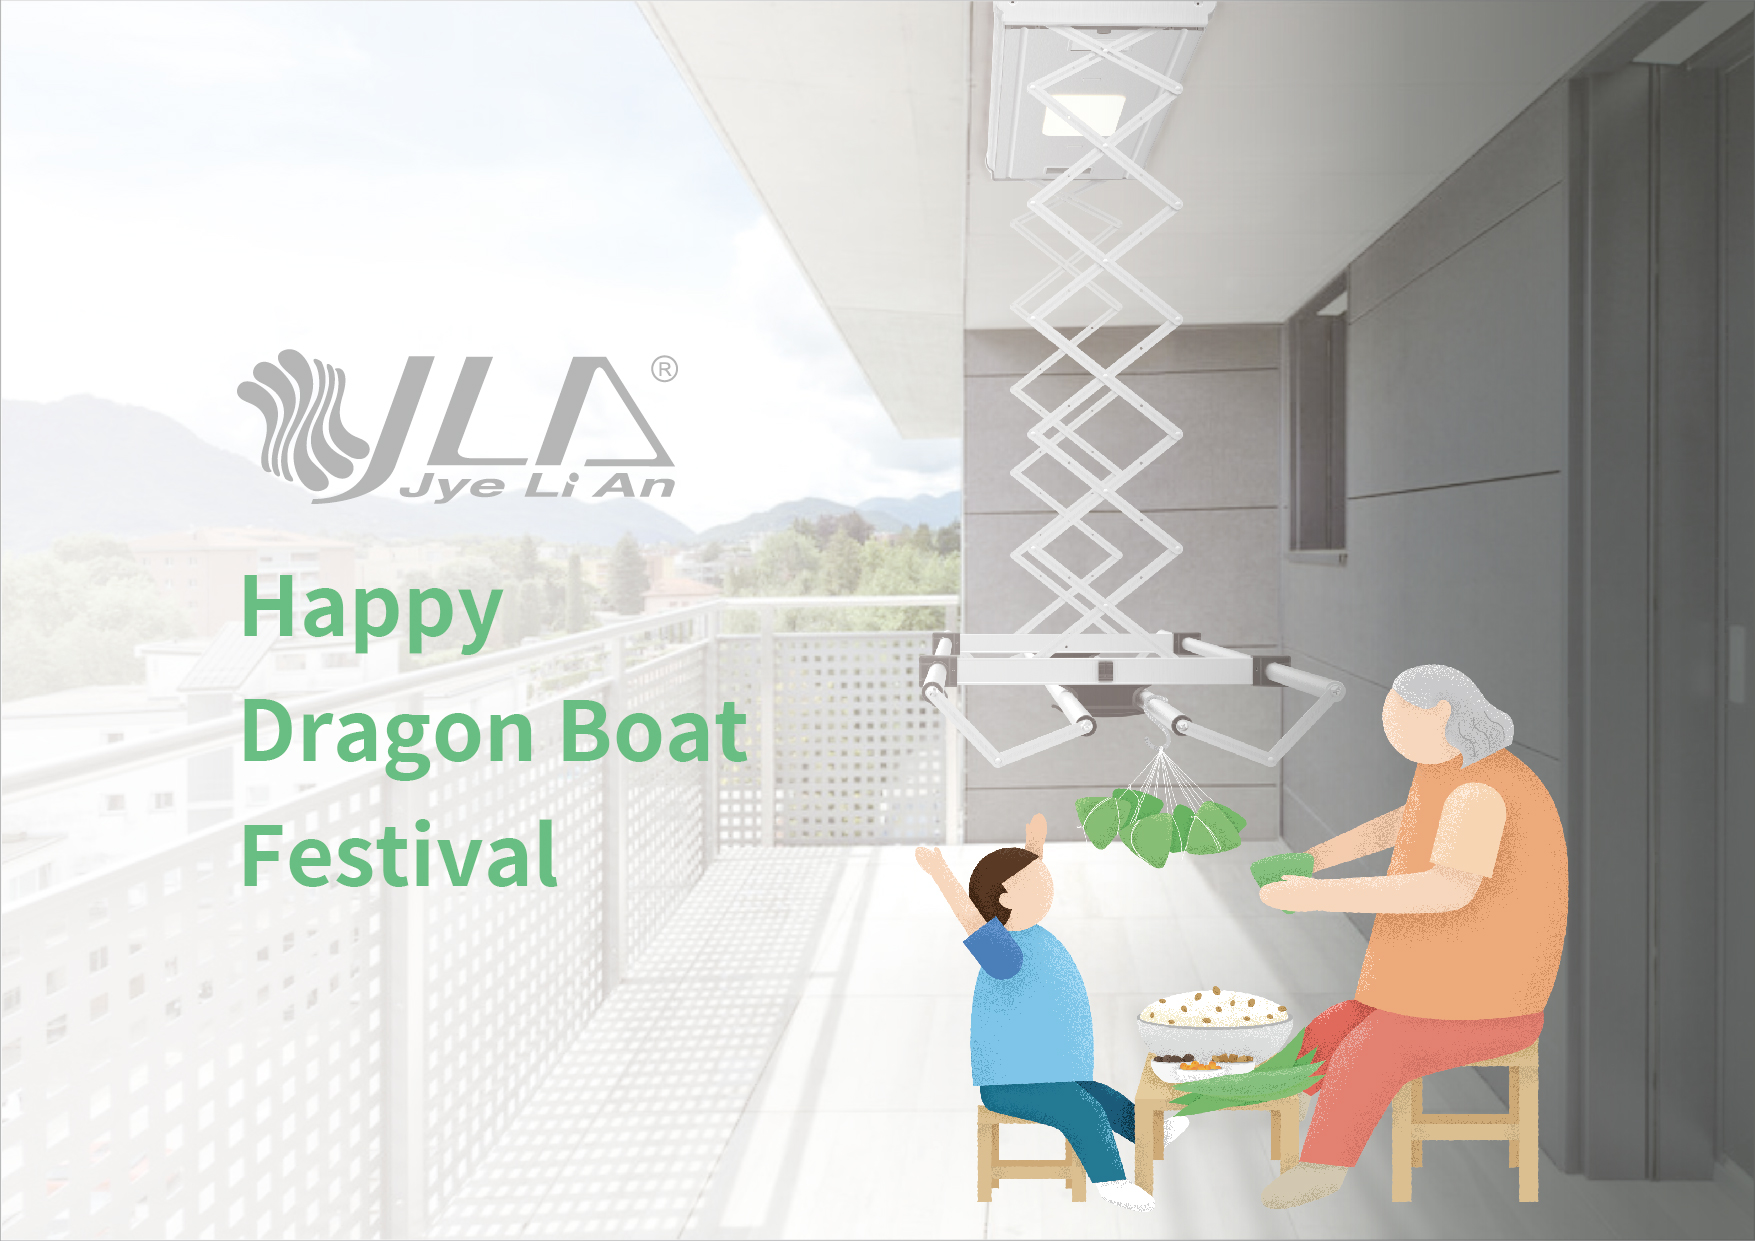 Happy Dragon Boat Festival 2020!